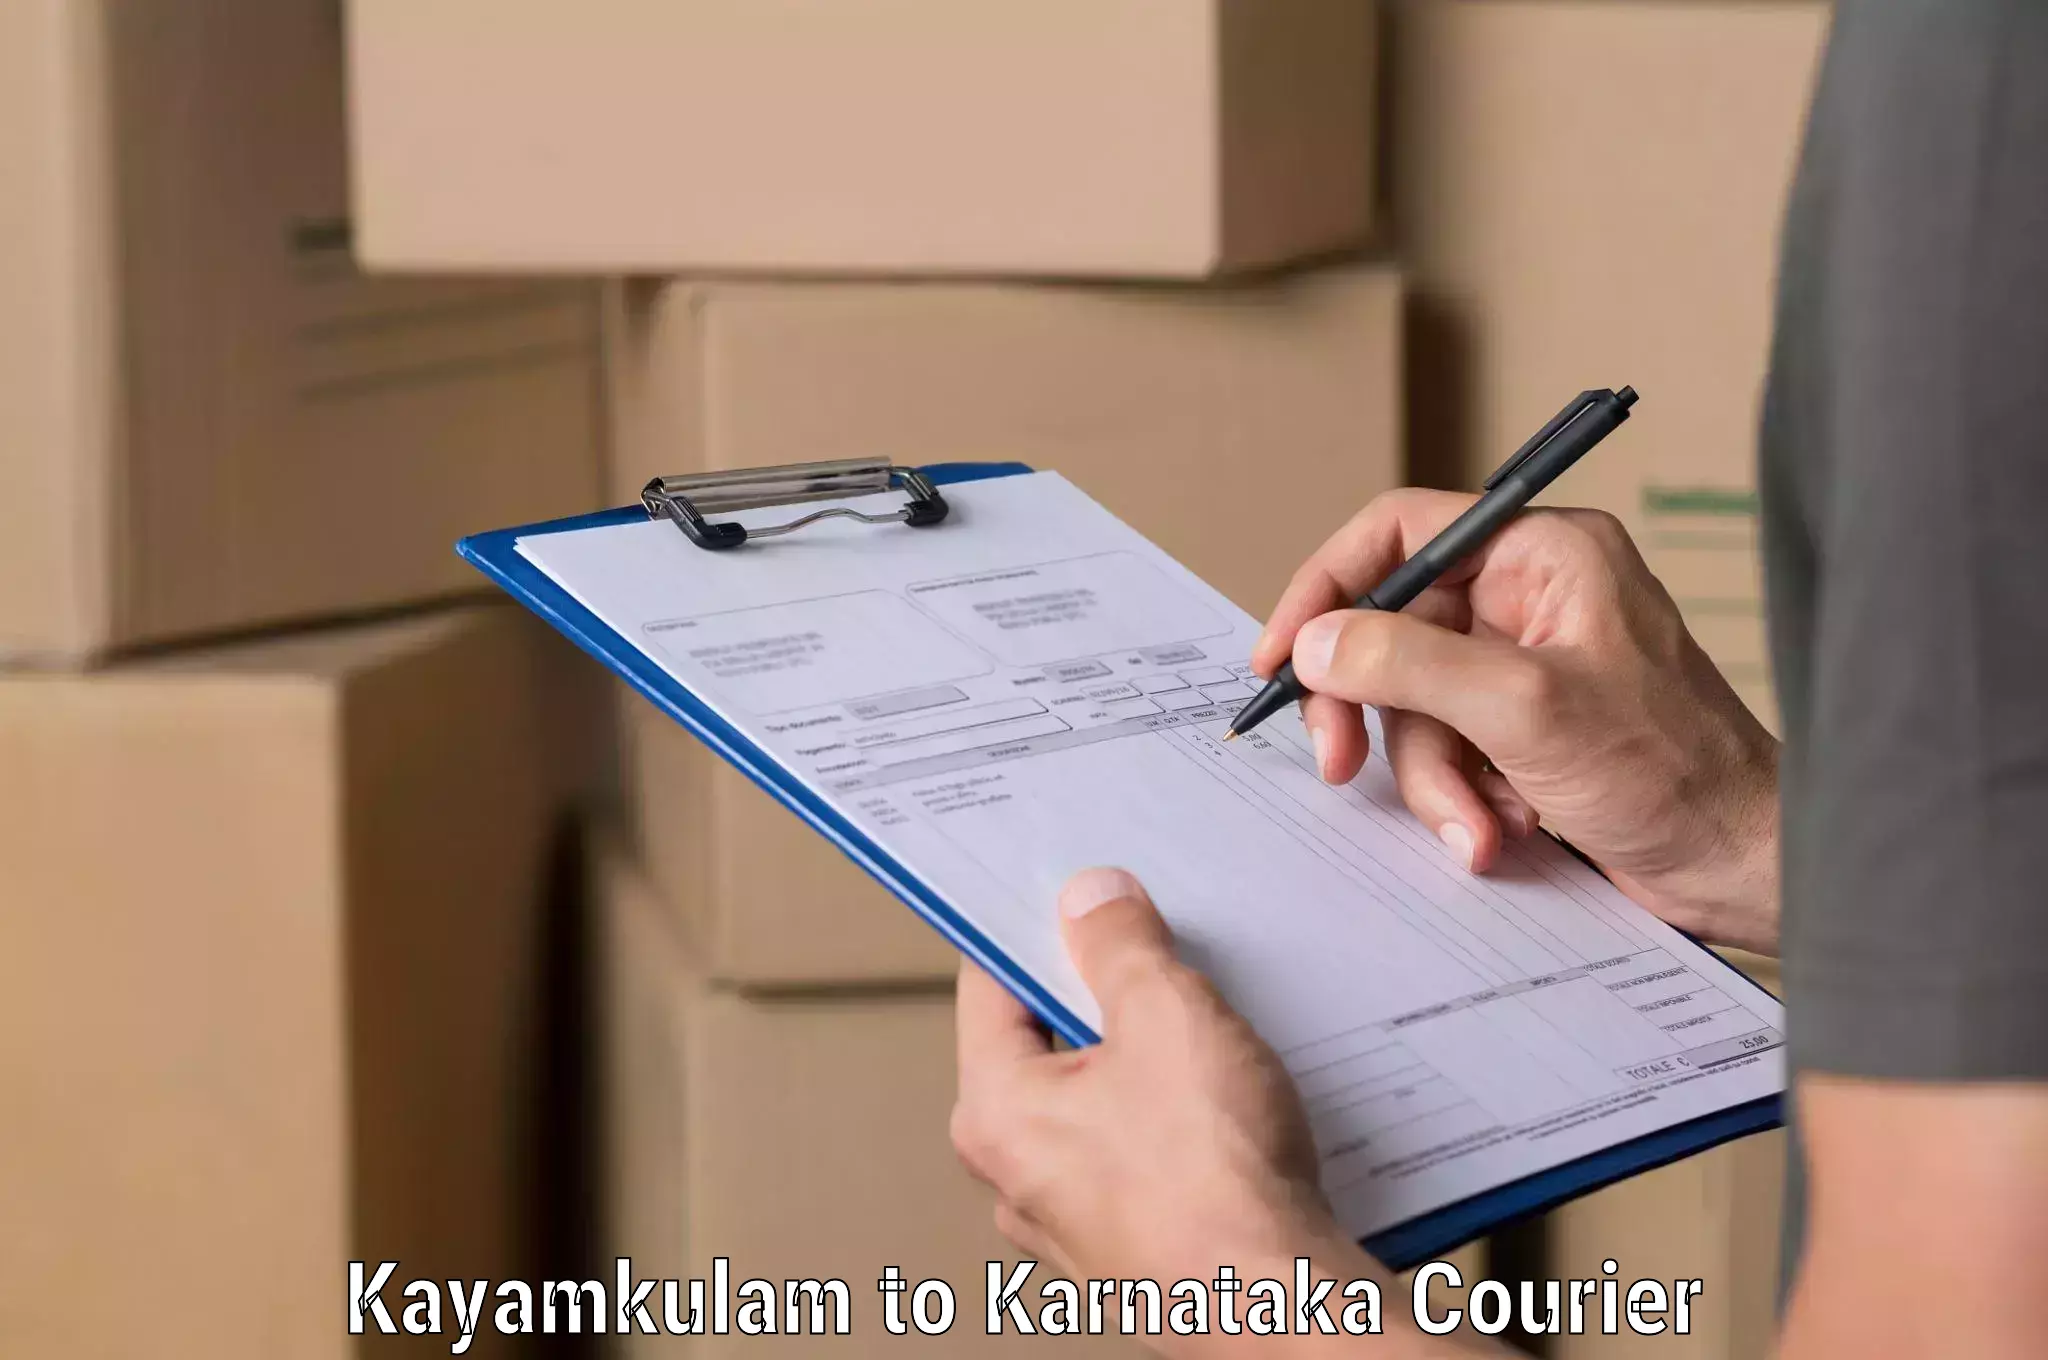 Reliable delivery network Kayamkulam to Nagamangala